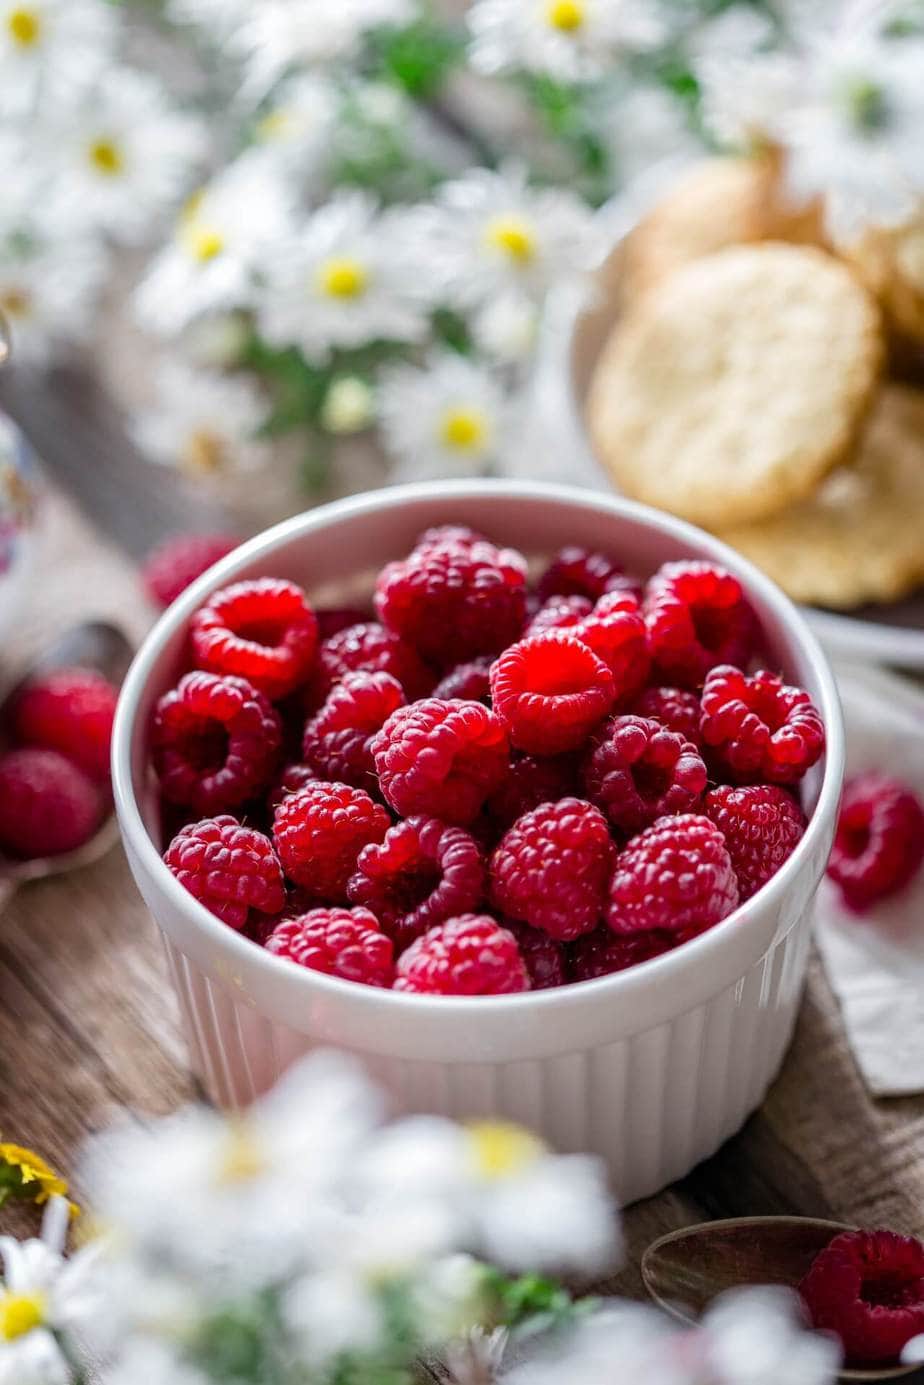 Beauty benefits of raspberries